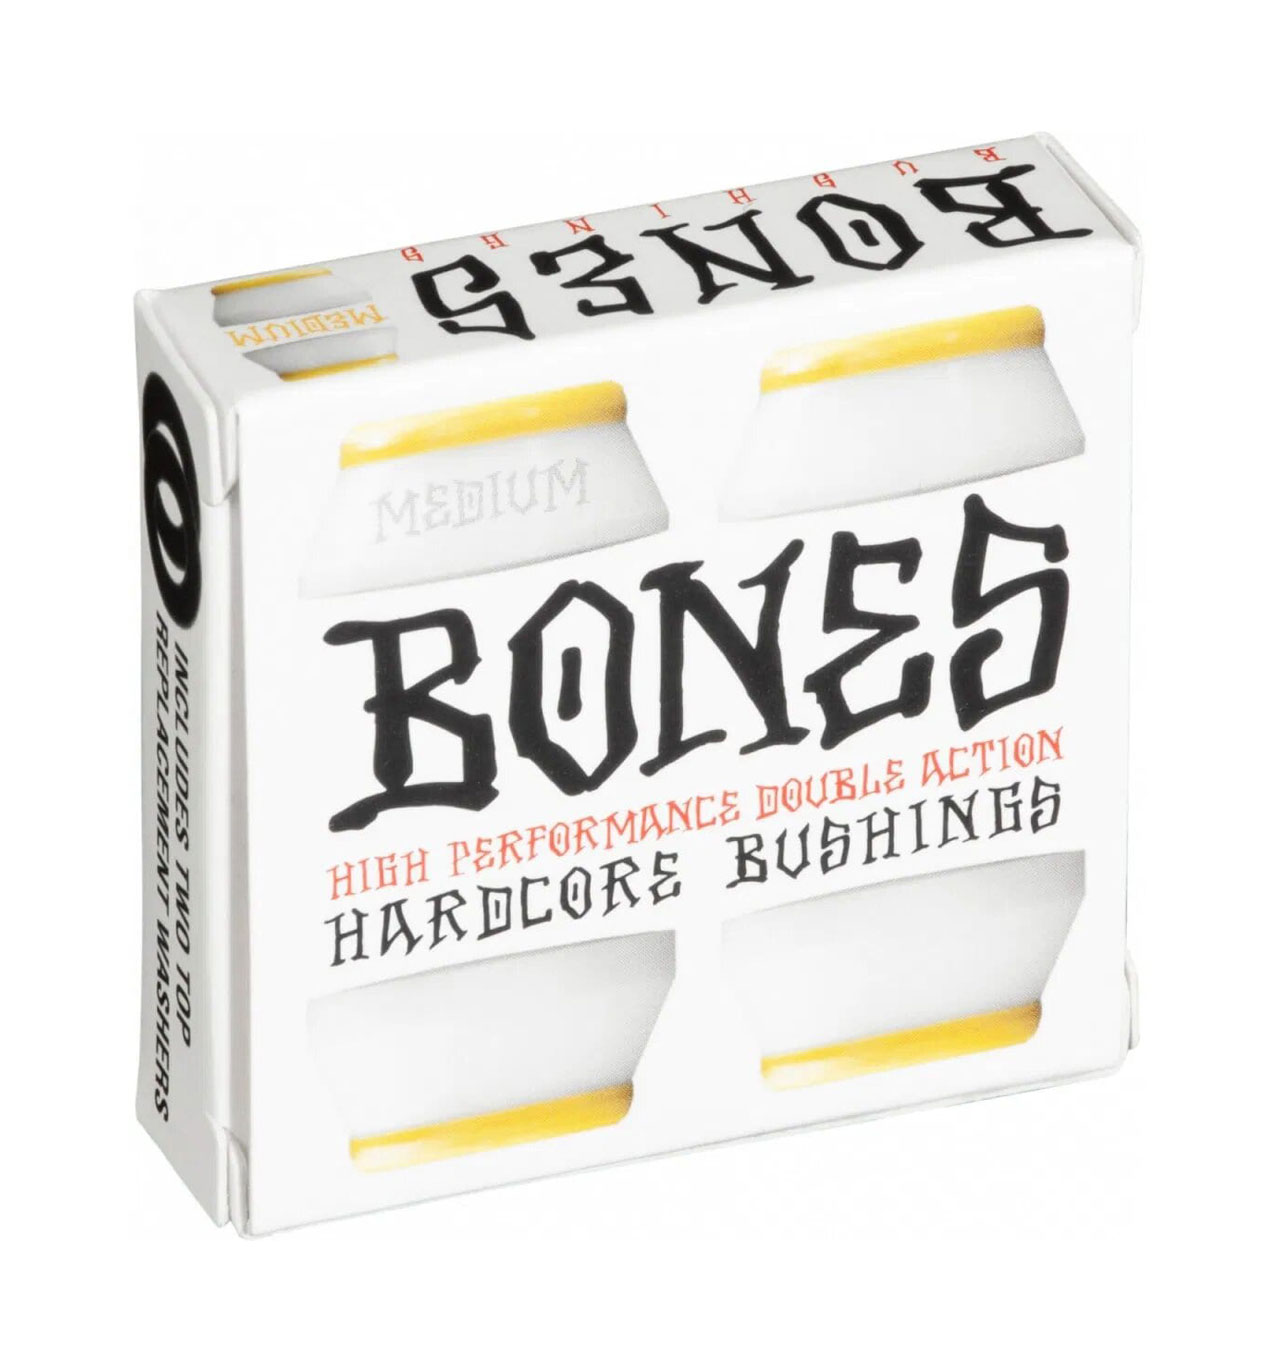 Bones---Hardcore-Bushings-3-Medium-White-91A